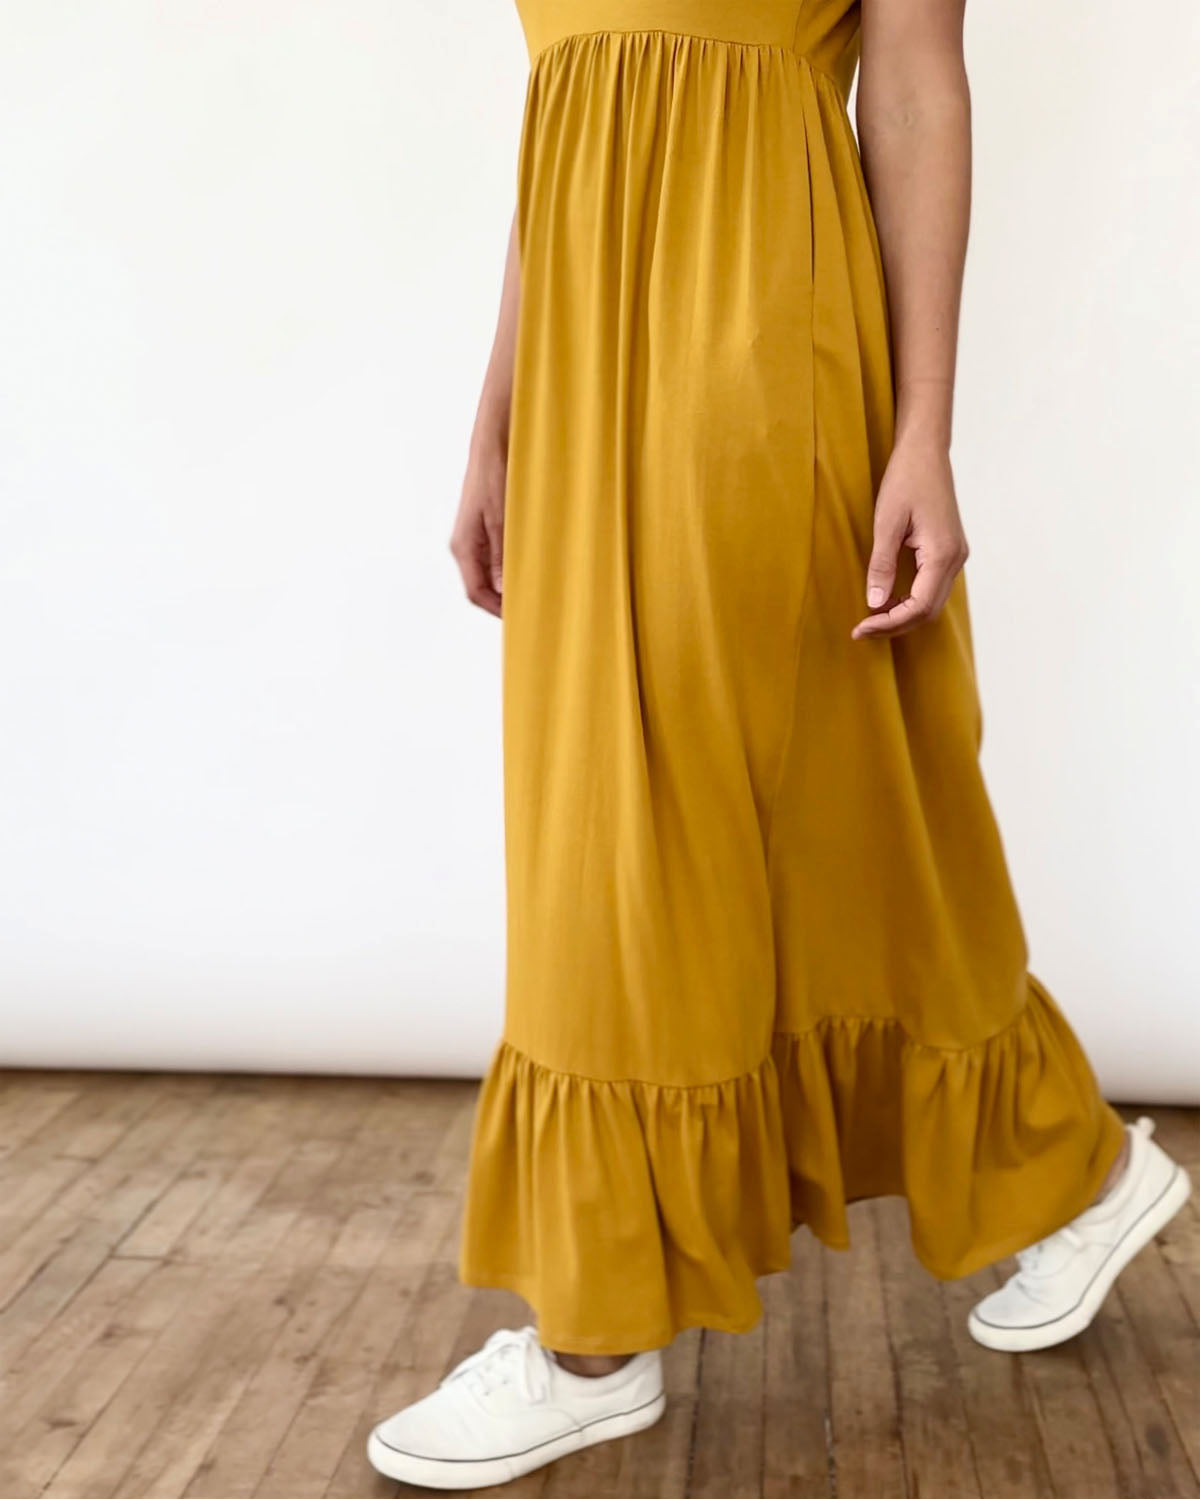 HAVEN maxi dress in Mustard